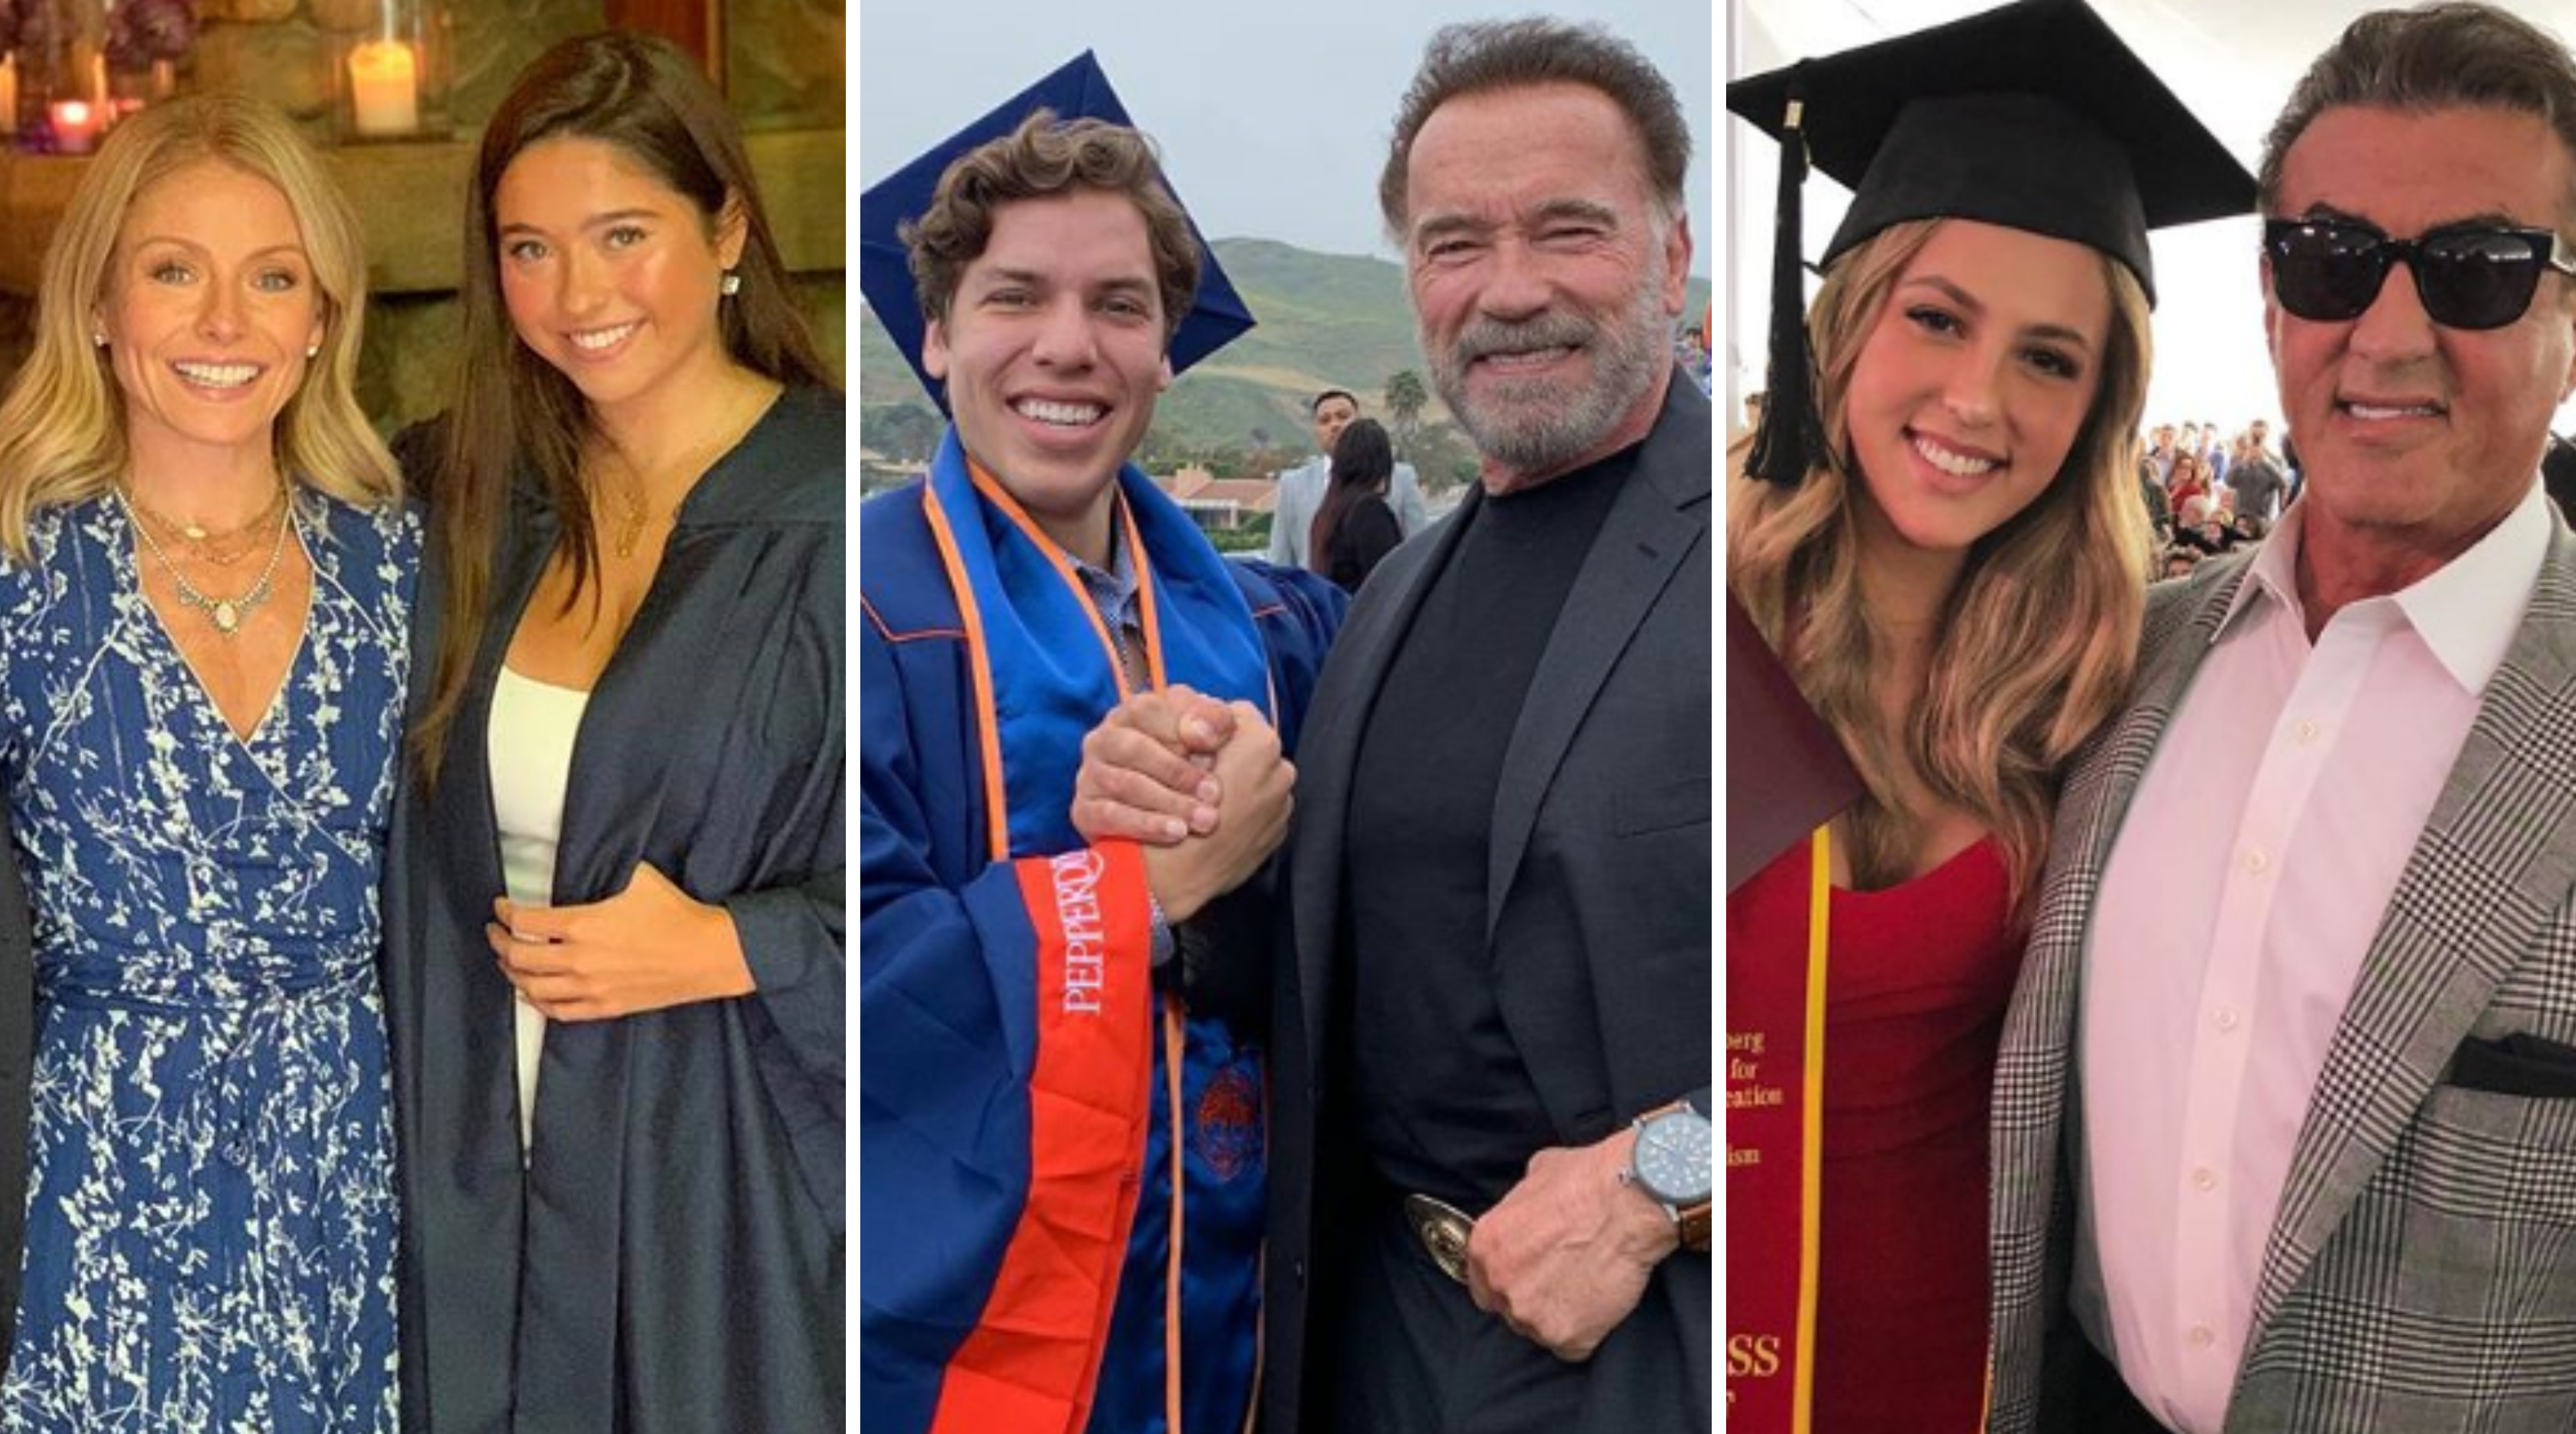 Alex Rodriguez, ex-wife Cynthia reunite for daughter's graduation